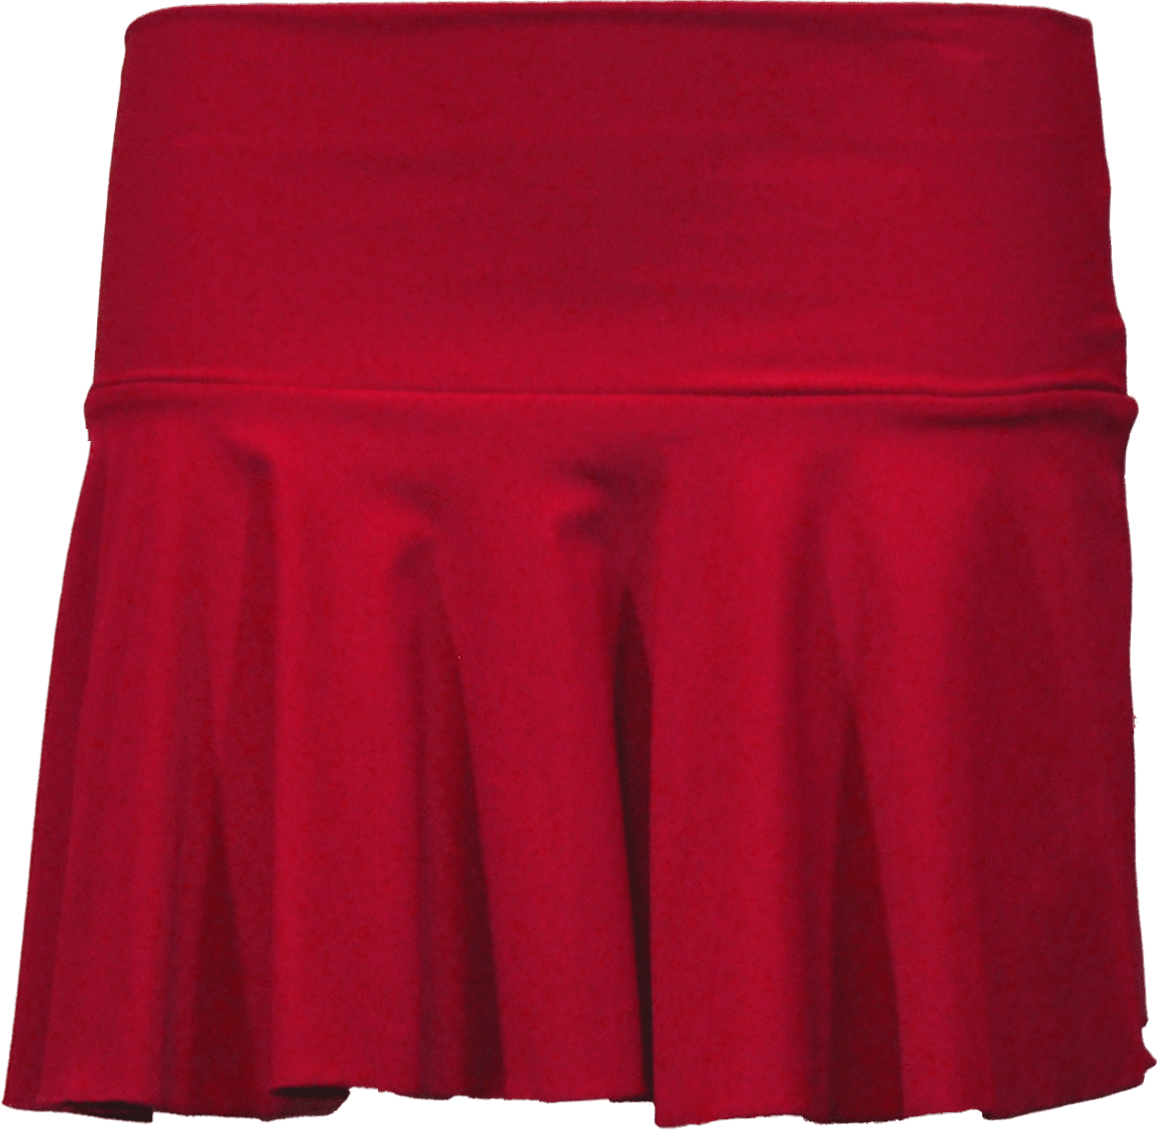 Ruffle Skirt - Red - FINAL SALE - DM Fashion